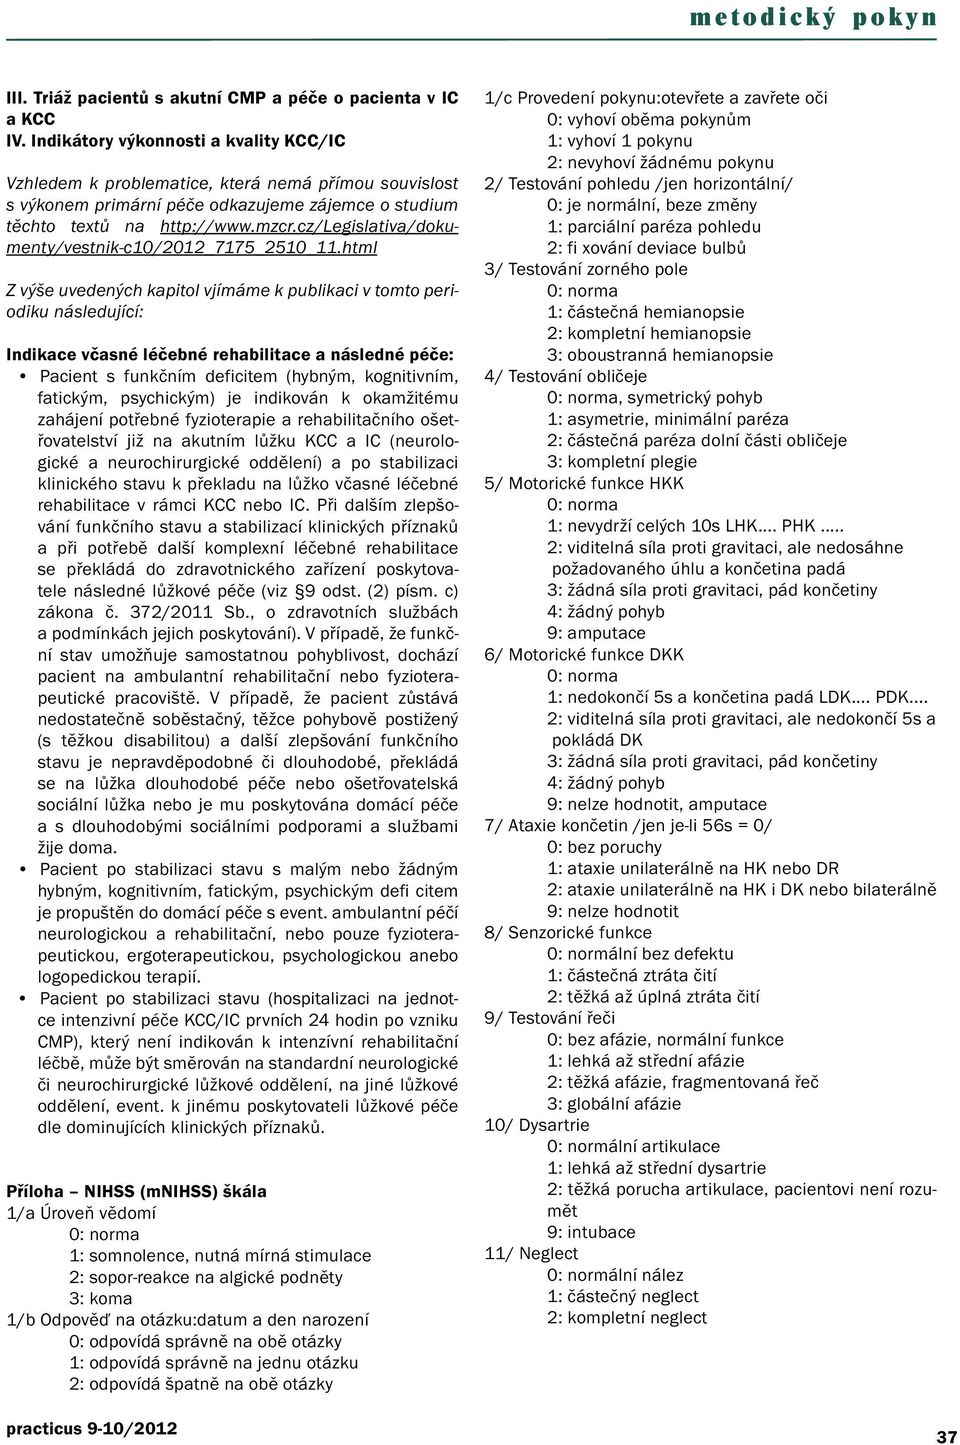 cz/legislativa/dokumenty/vestnik-c10/2012_7175_2510_11.